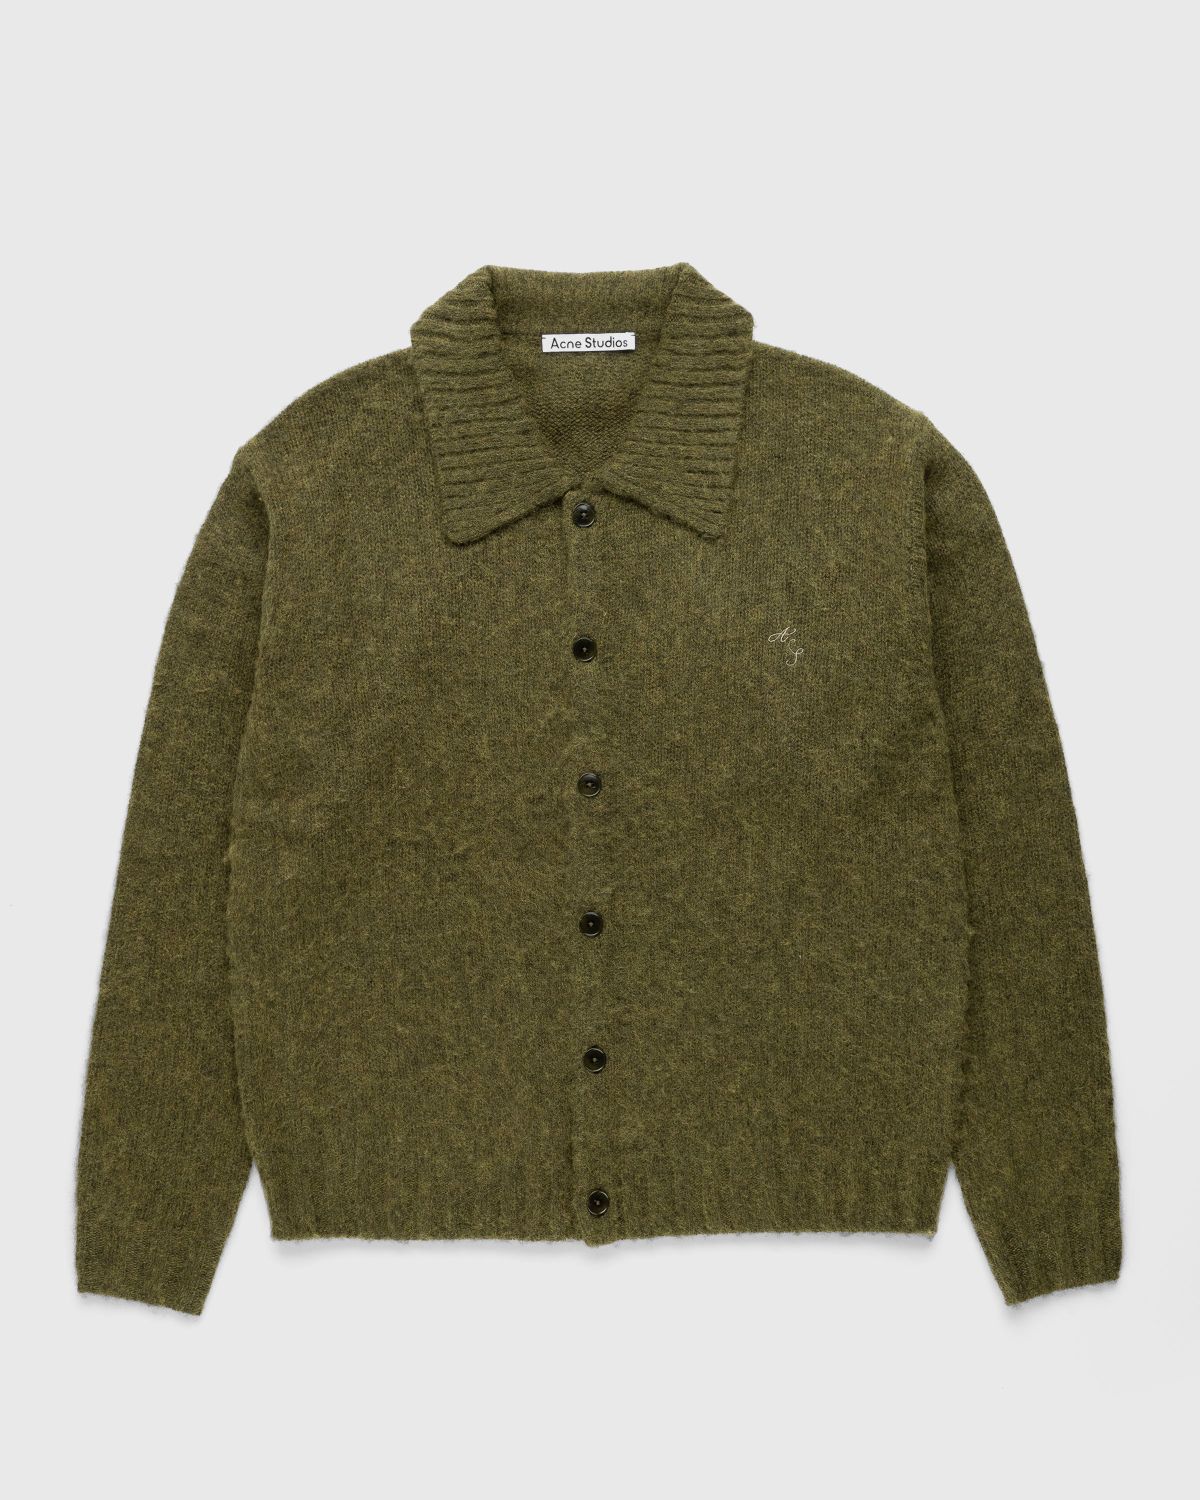 Acne Studios – Polo Wool Cardigan Dark Olive - Knitwear - Green - Image 1